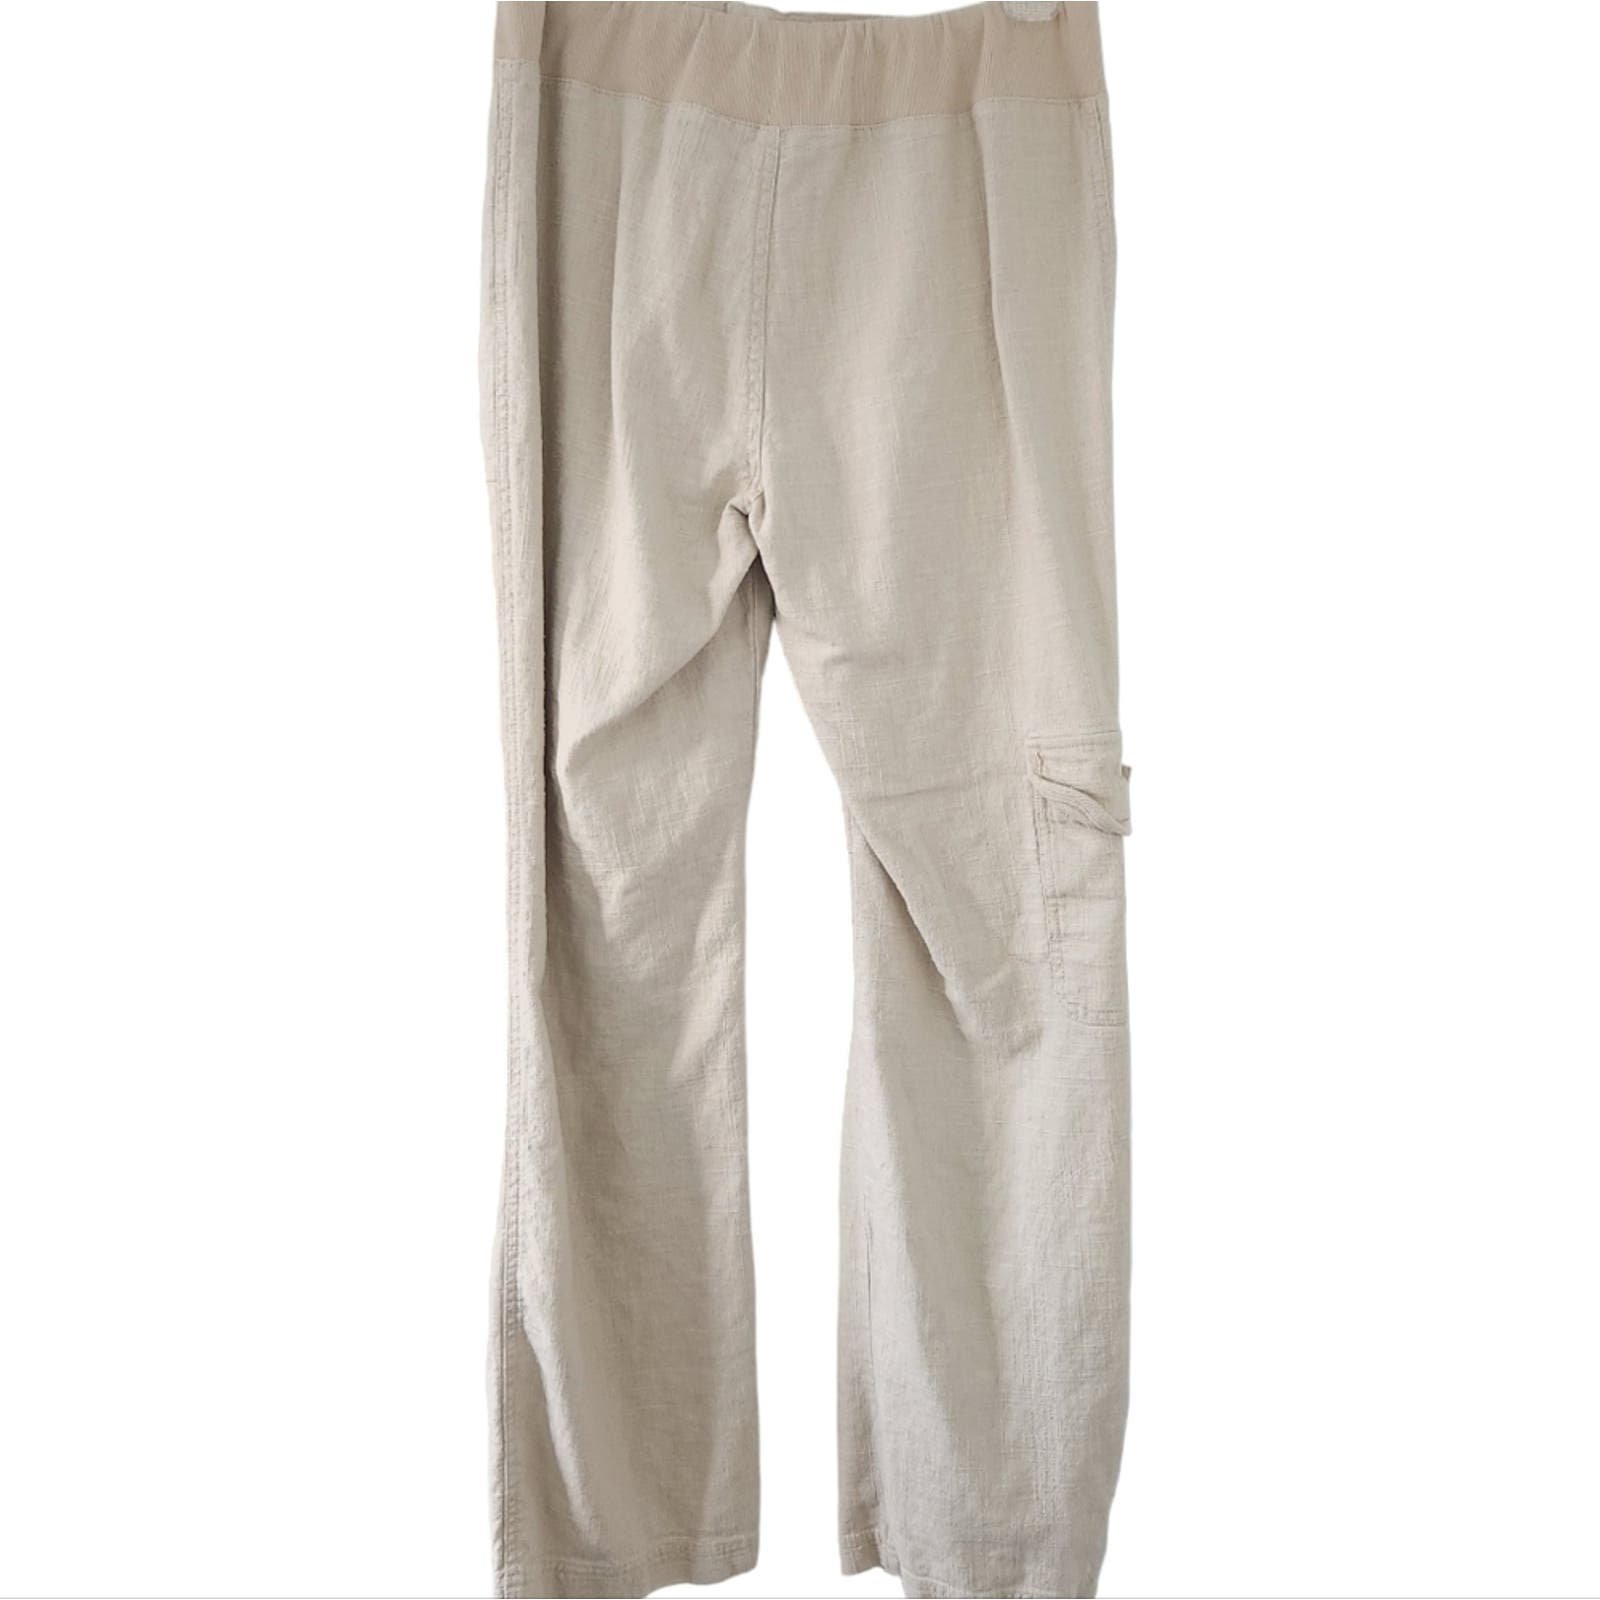 Discounted Soft Surroundings Linen Blend Pants Beige XS Xsmall Coastal Lagenlook Trouser OBbRKpLAm High Quaity